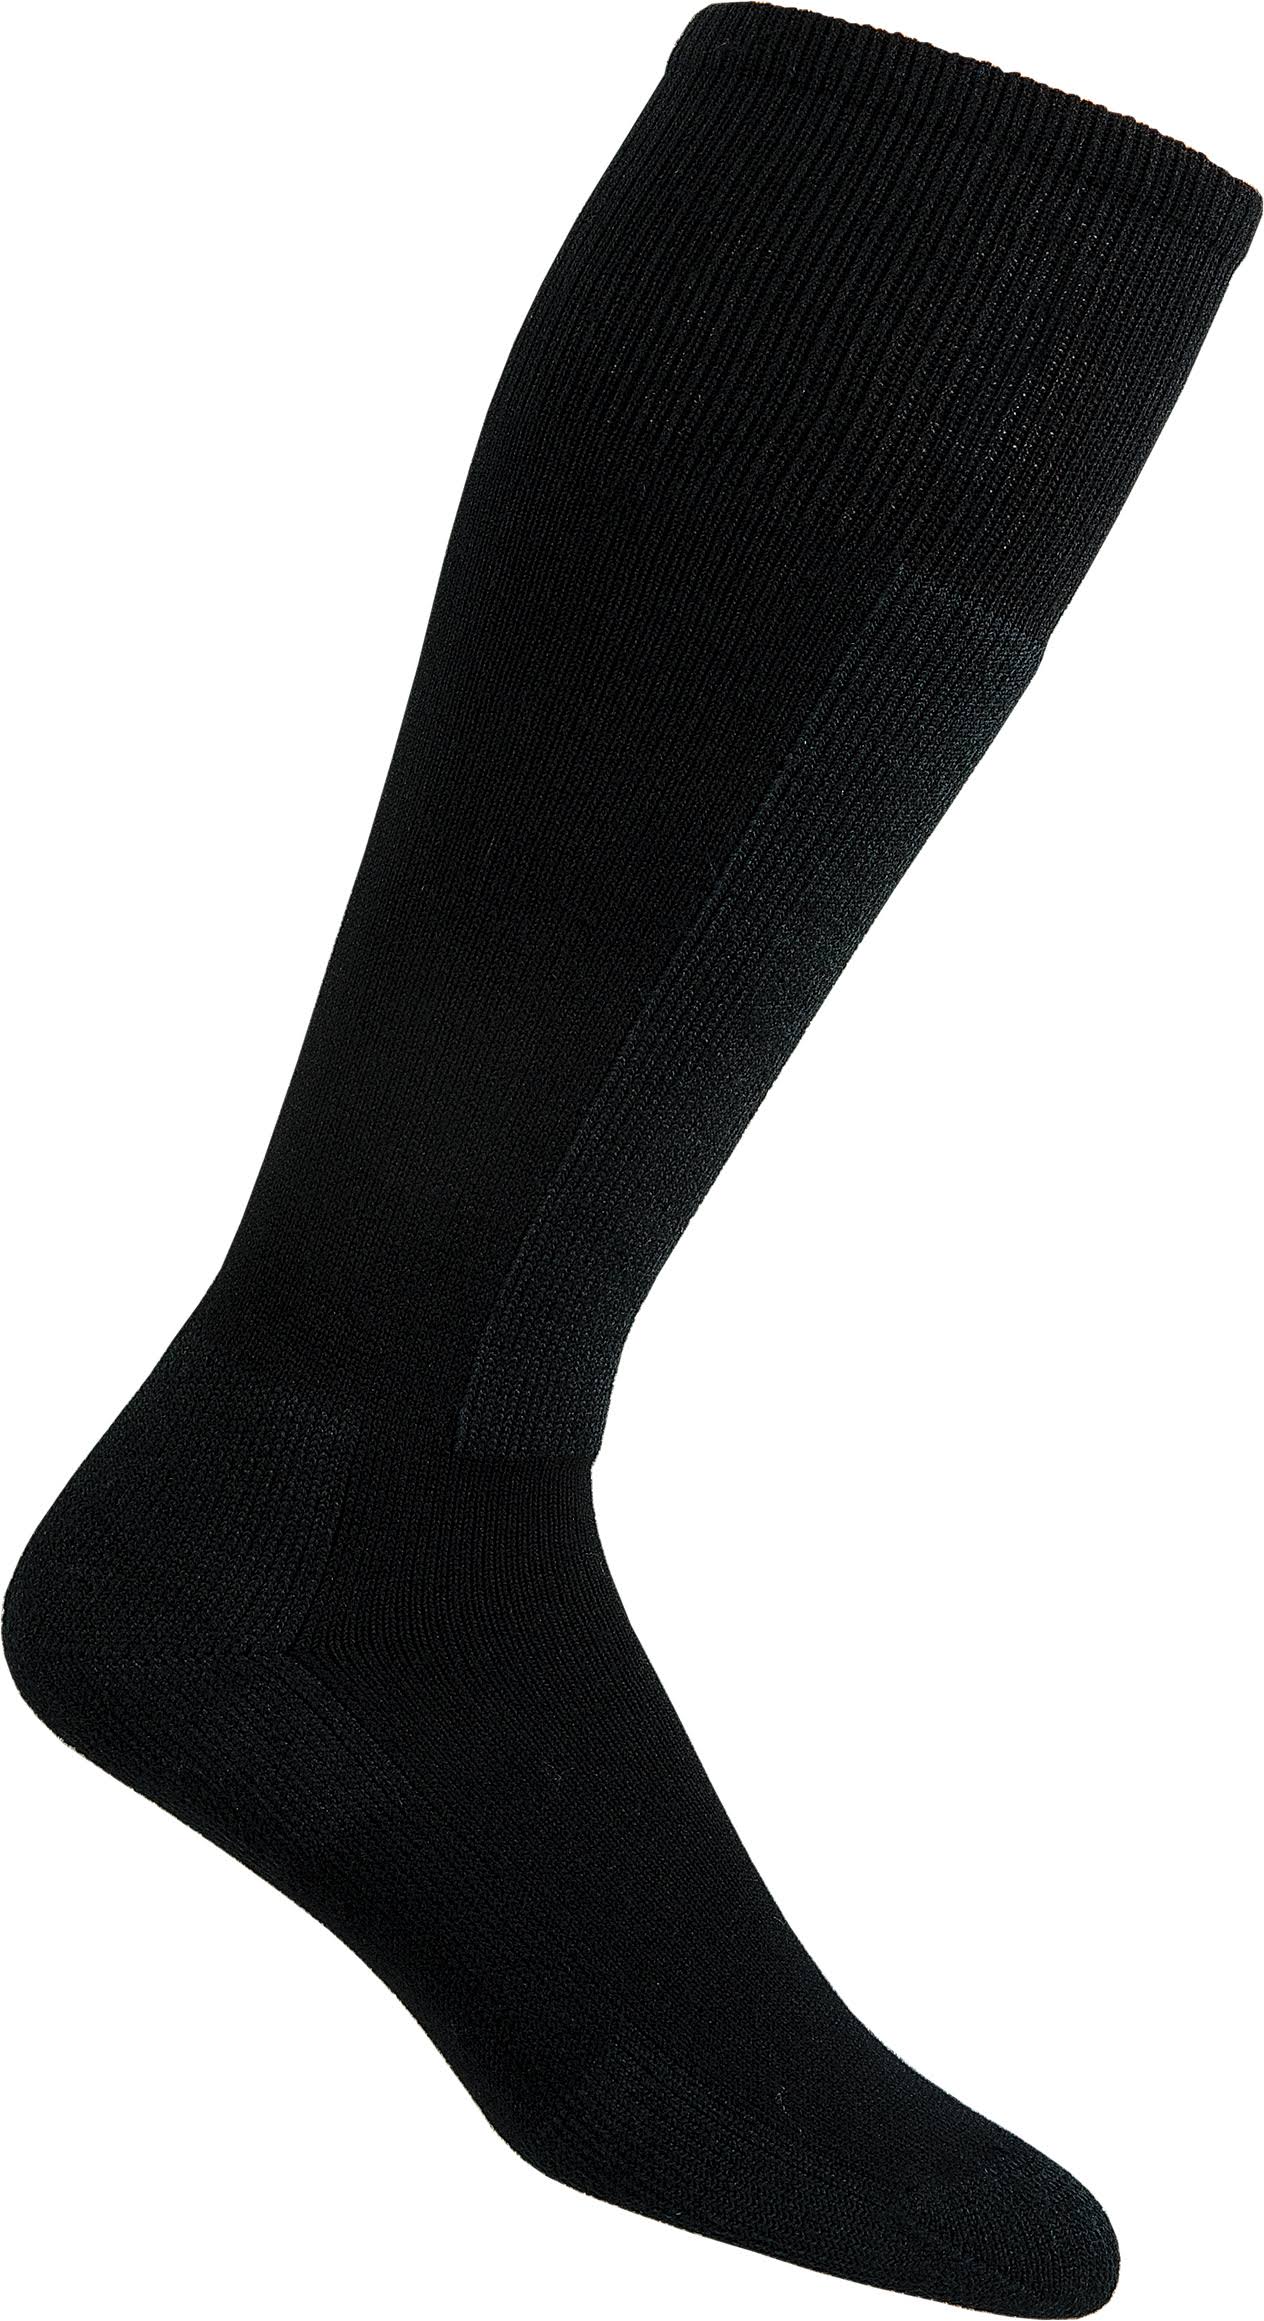 Thorlo Women's SL-9-454 Ski Sock - Black Diamond, Medium